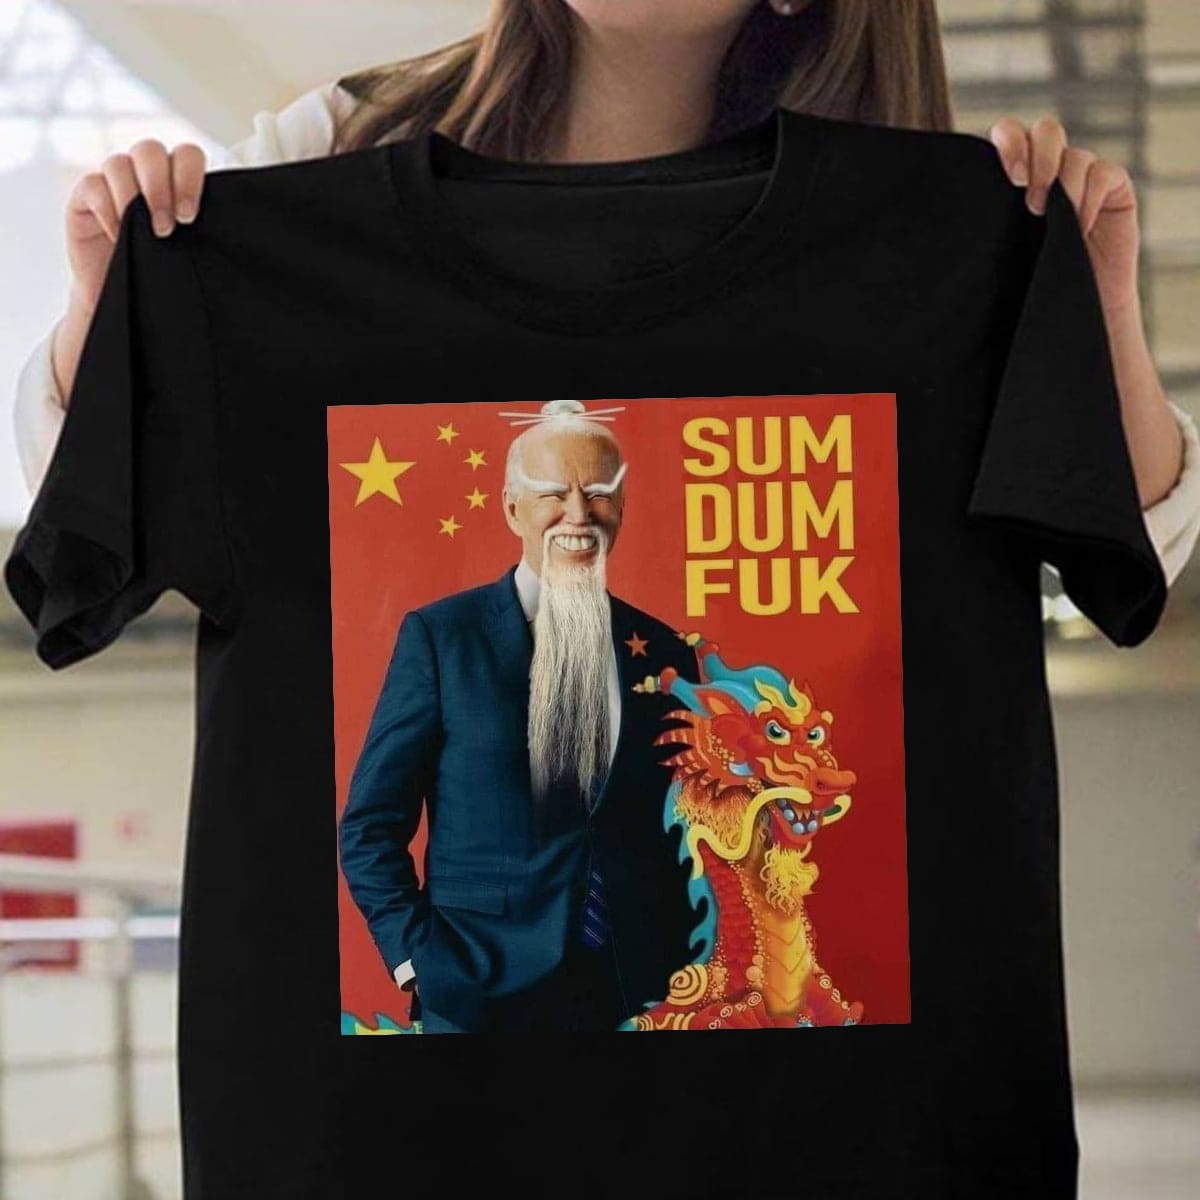 Sum dum fuk - Silly Joe Biden, Chinese Joe Biden, Fuck Joe Biden T-shirt